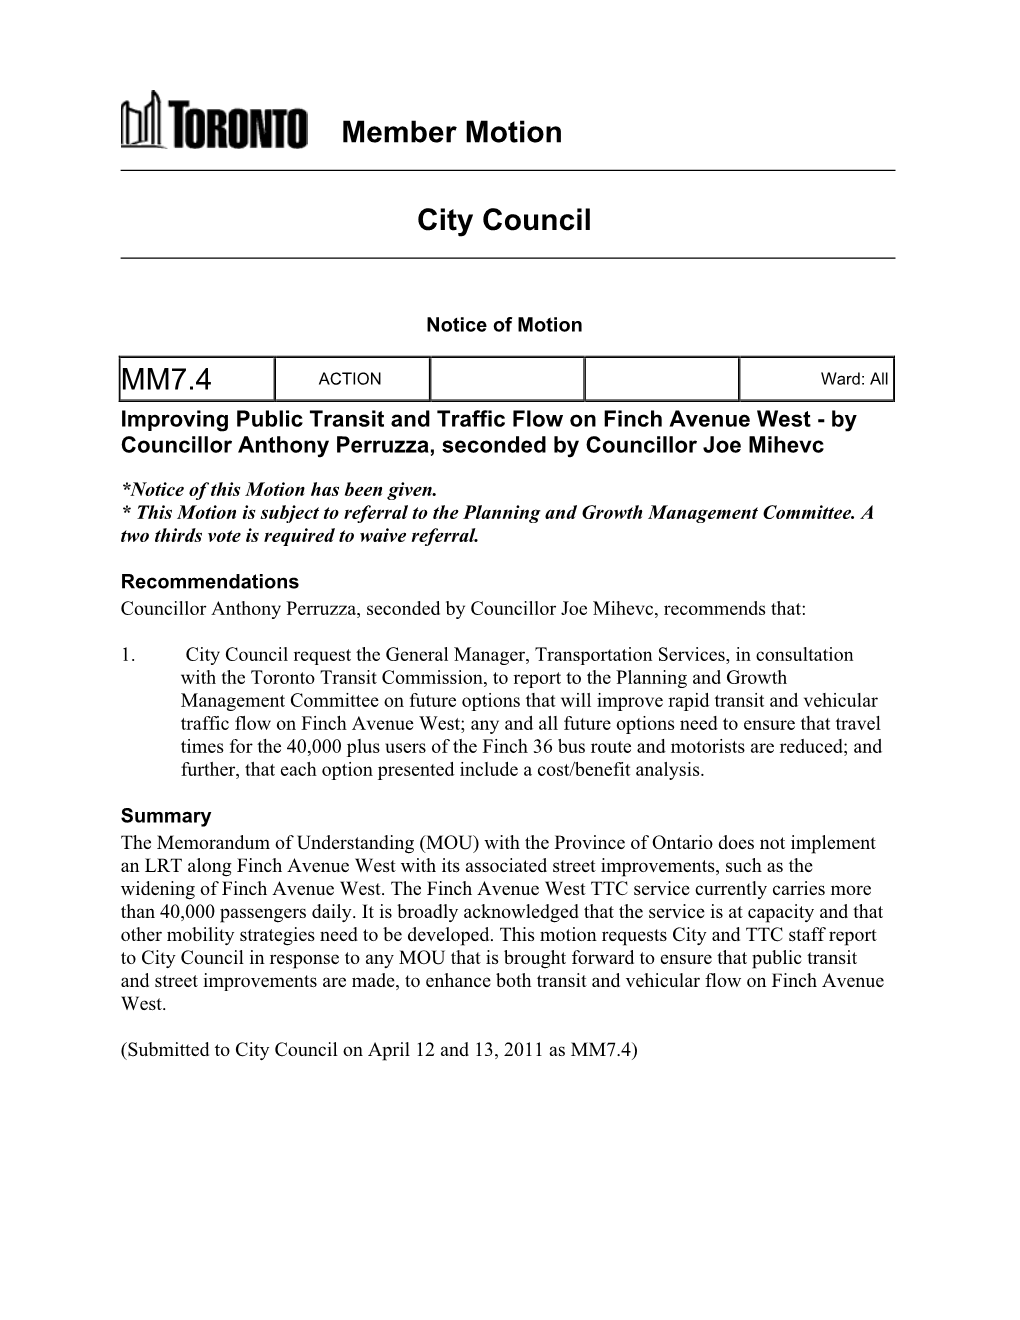 Member Motion City Council MM7.4